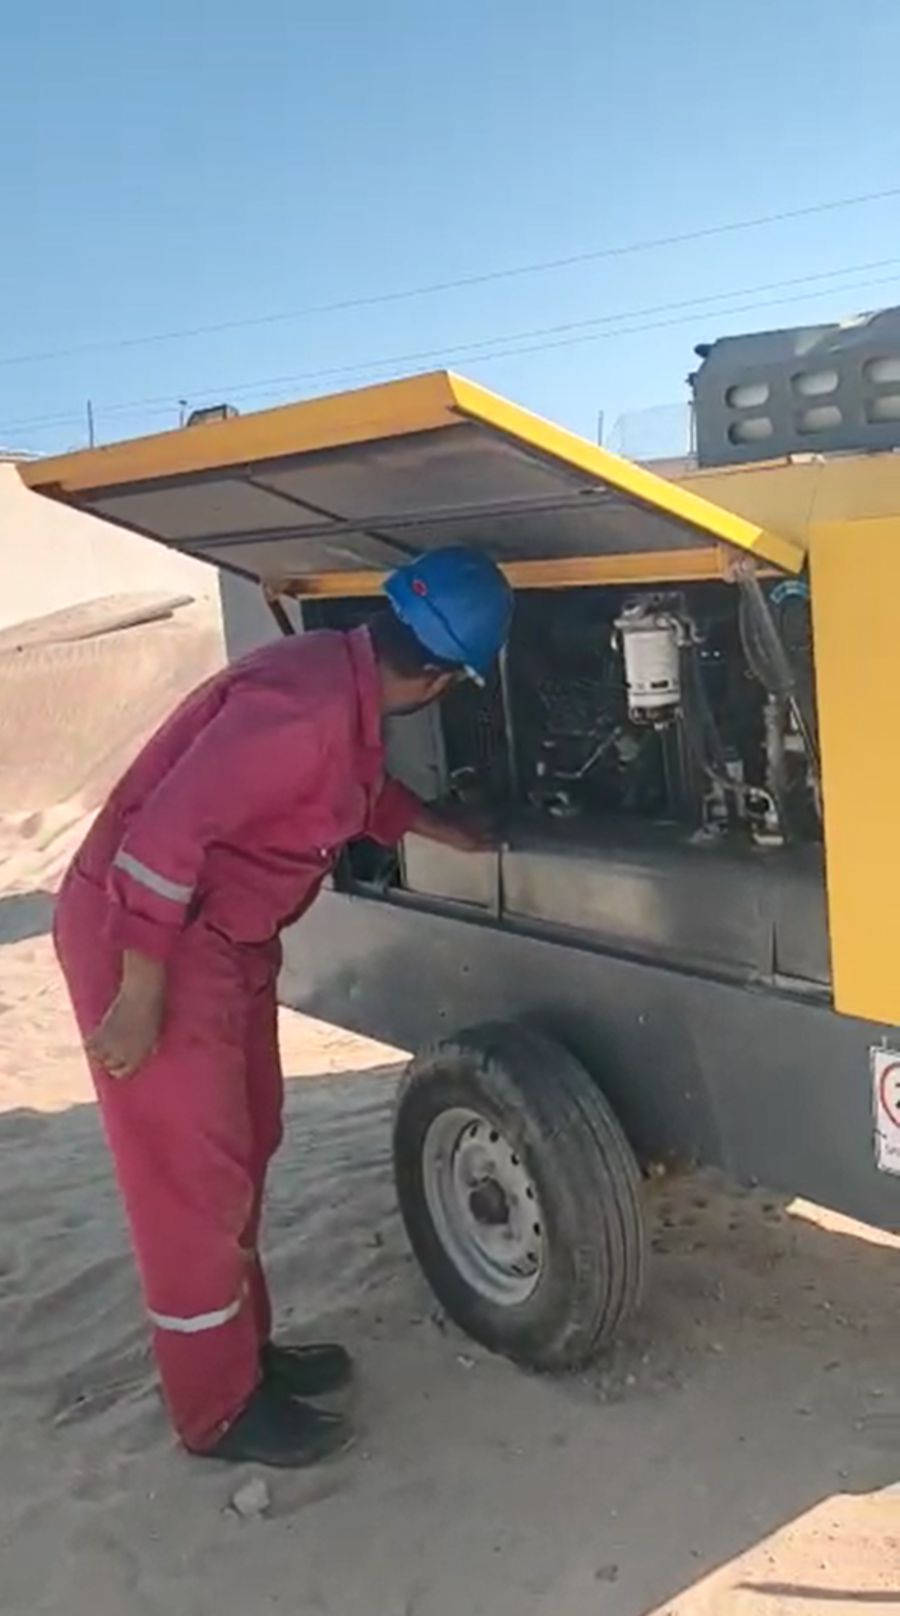 Egyptian desert sandblasting project puts Atlas Copco Air Compressor to the test